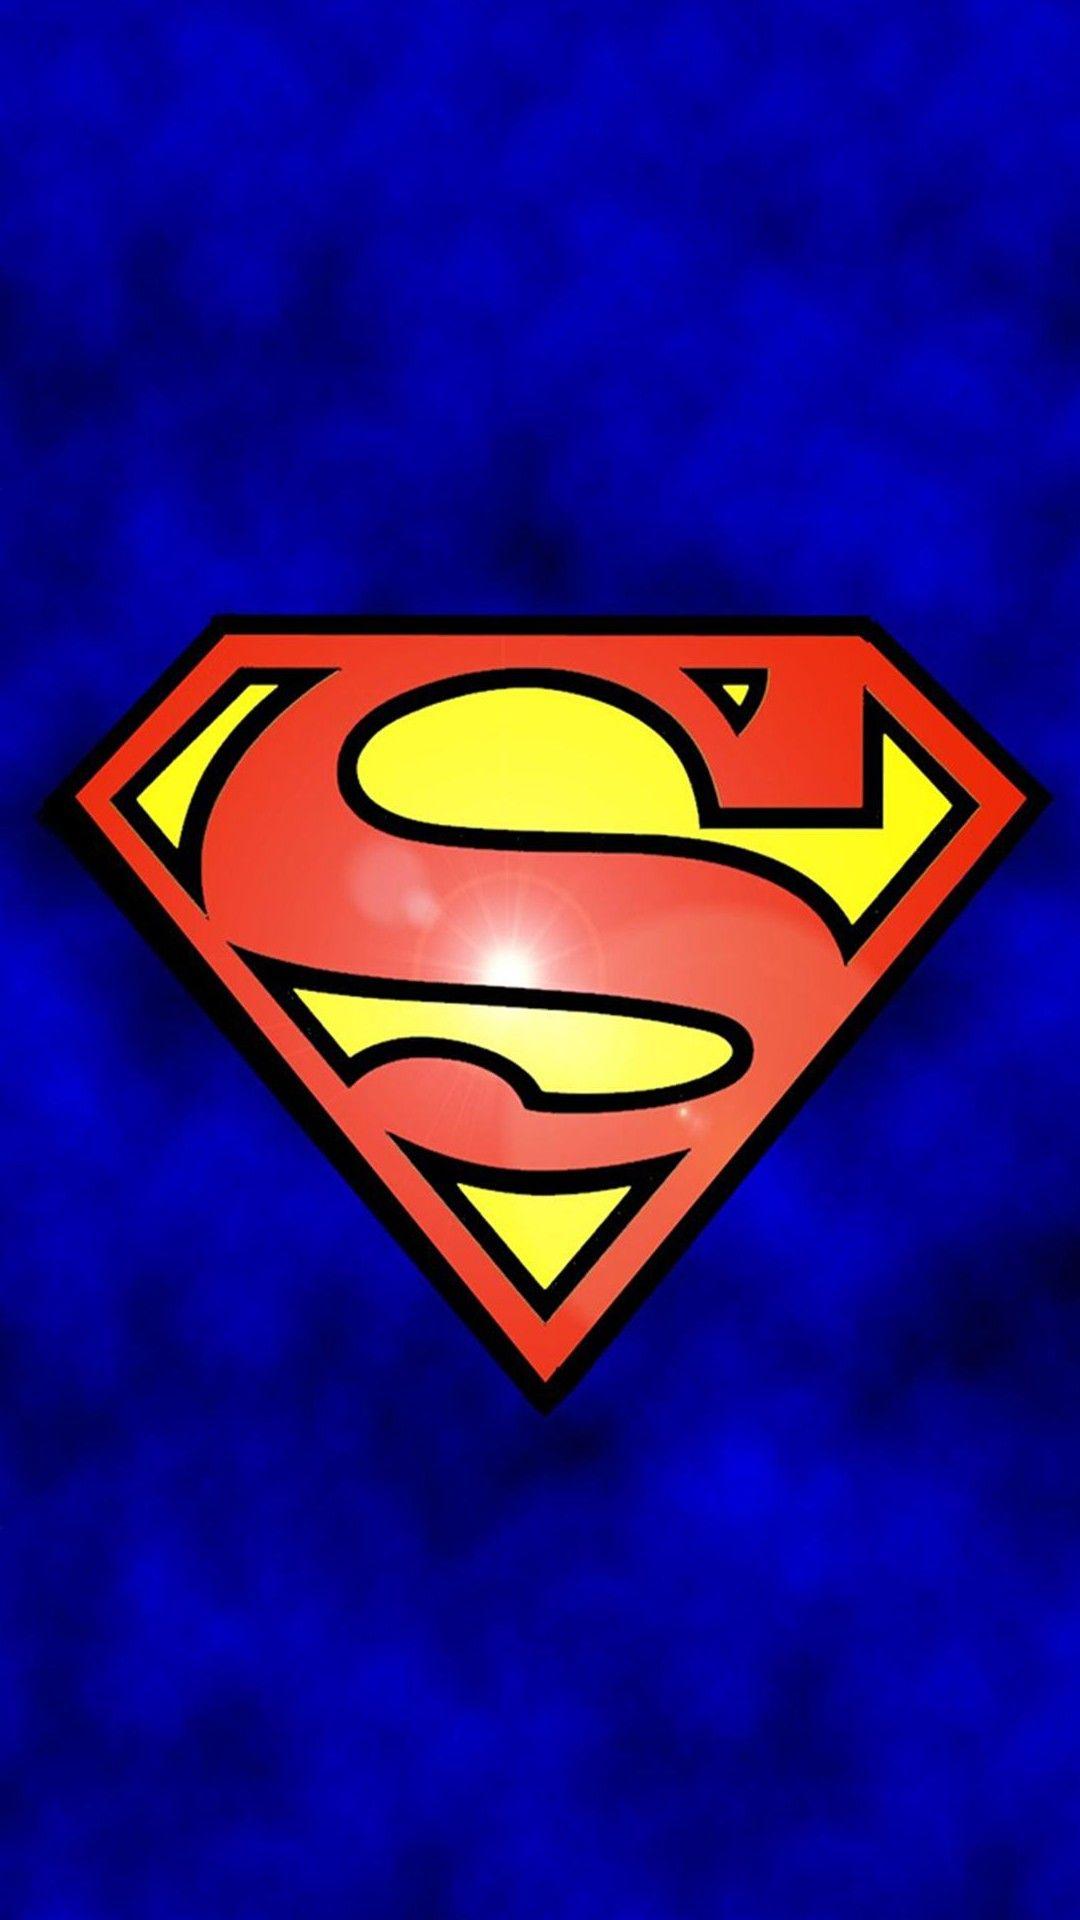 Wallpaper For > iPhone 4s Wallpaper Superman